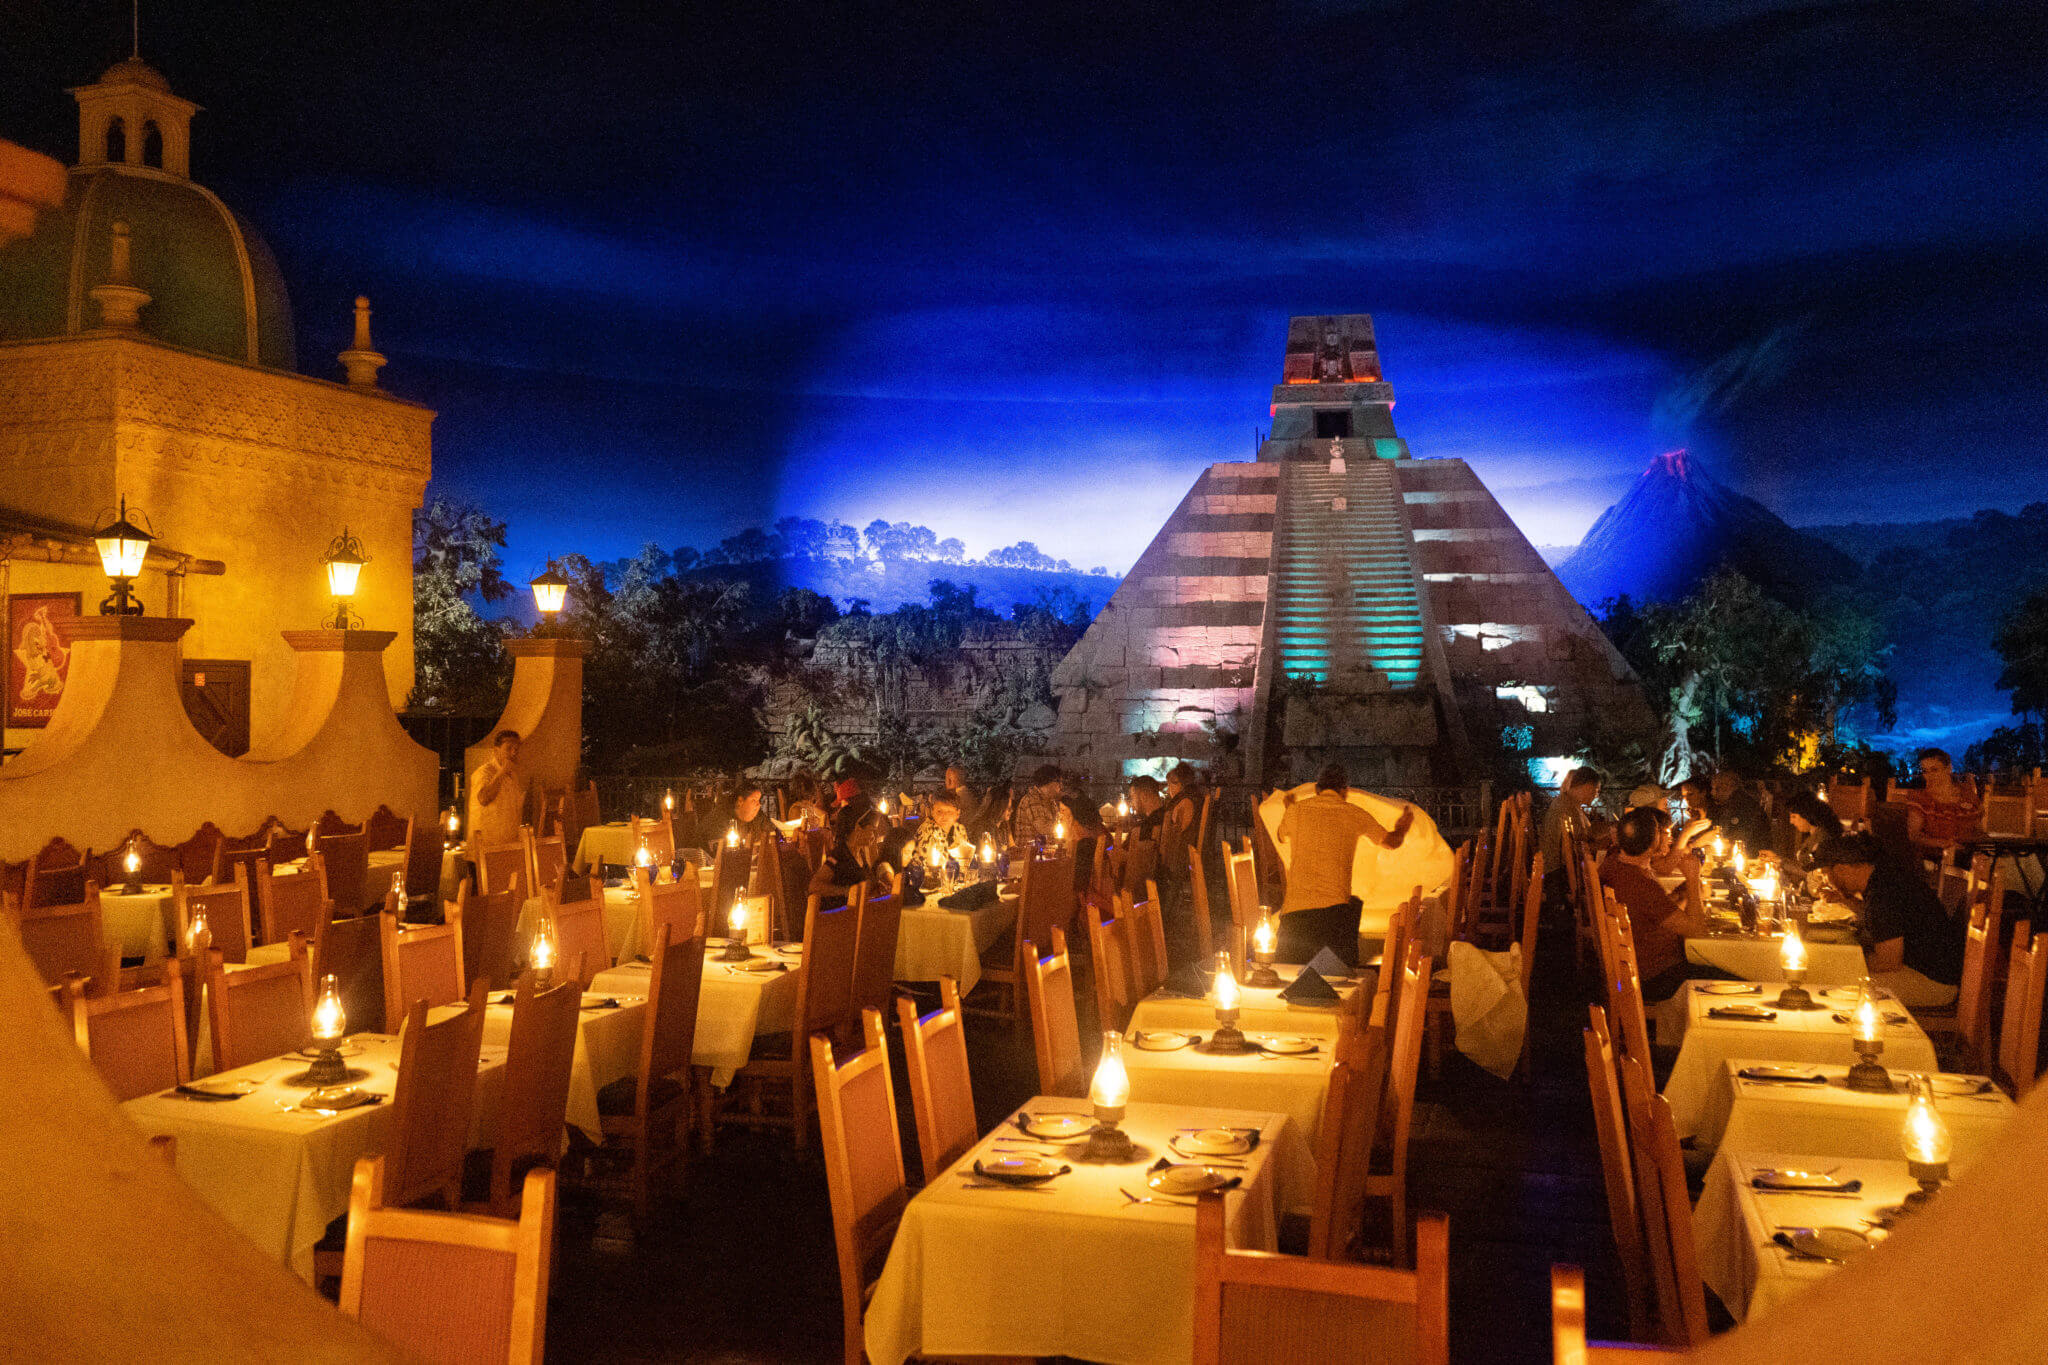 San Angel Inn Restaurante - Aztec Pyramid in Mexico Pavilion at Epcot, Disney World